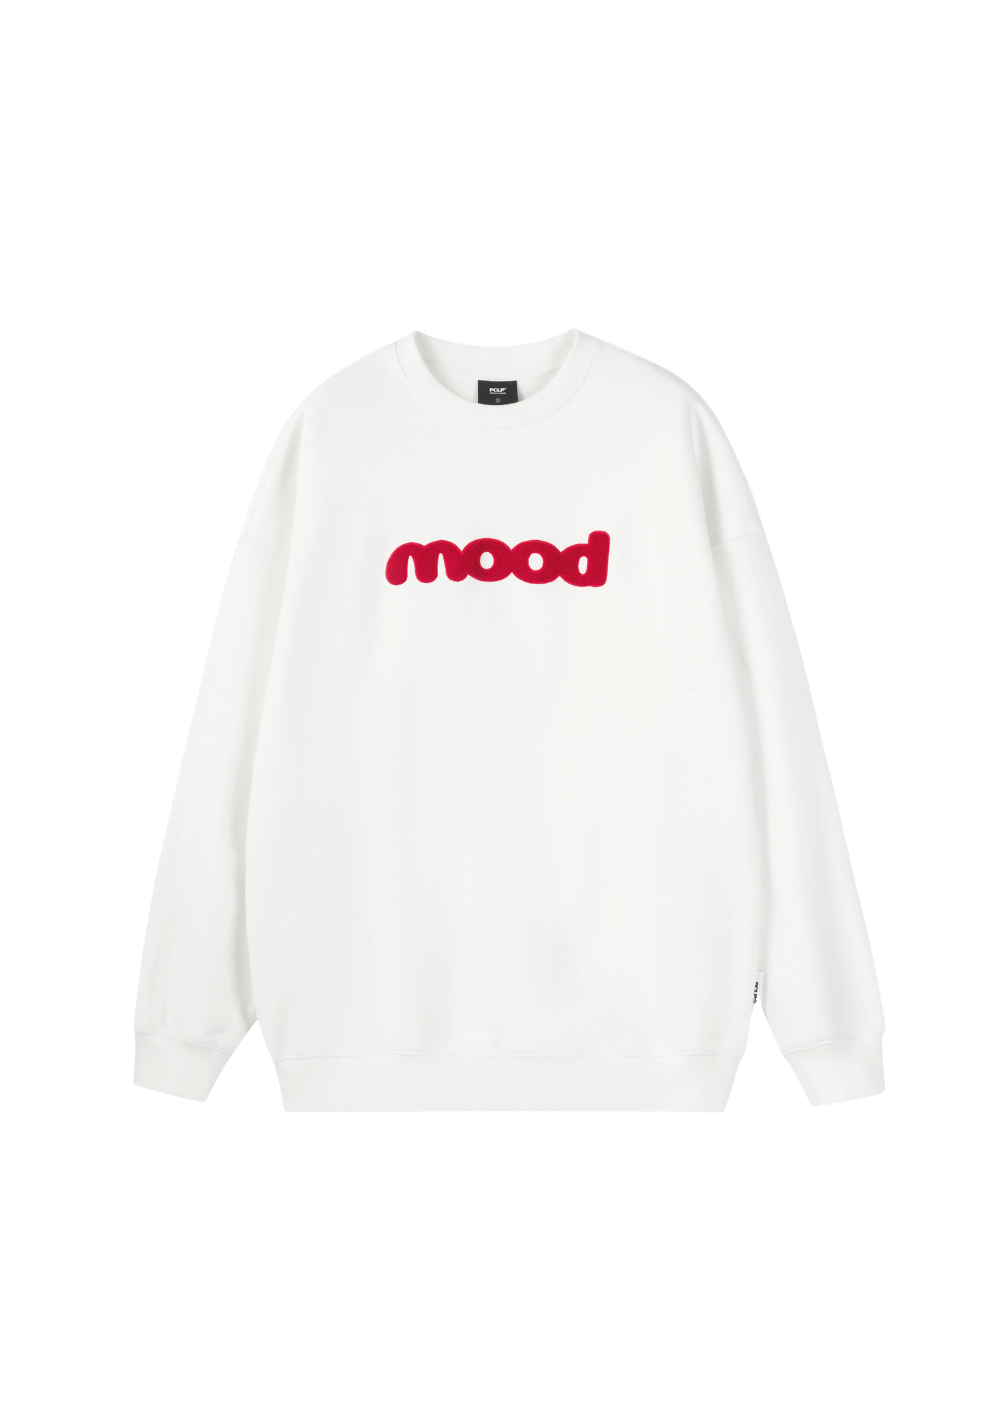 Classic American Style Sweatshirt | PSYLOS 1